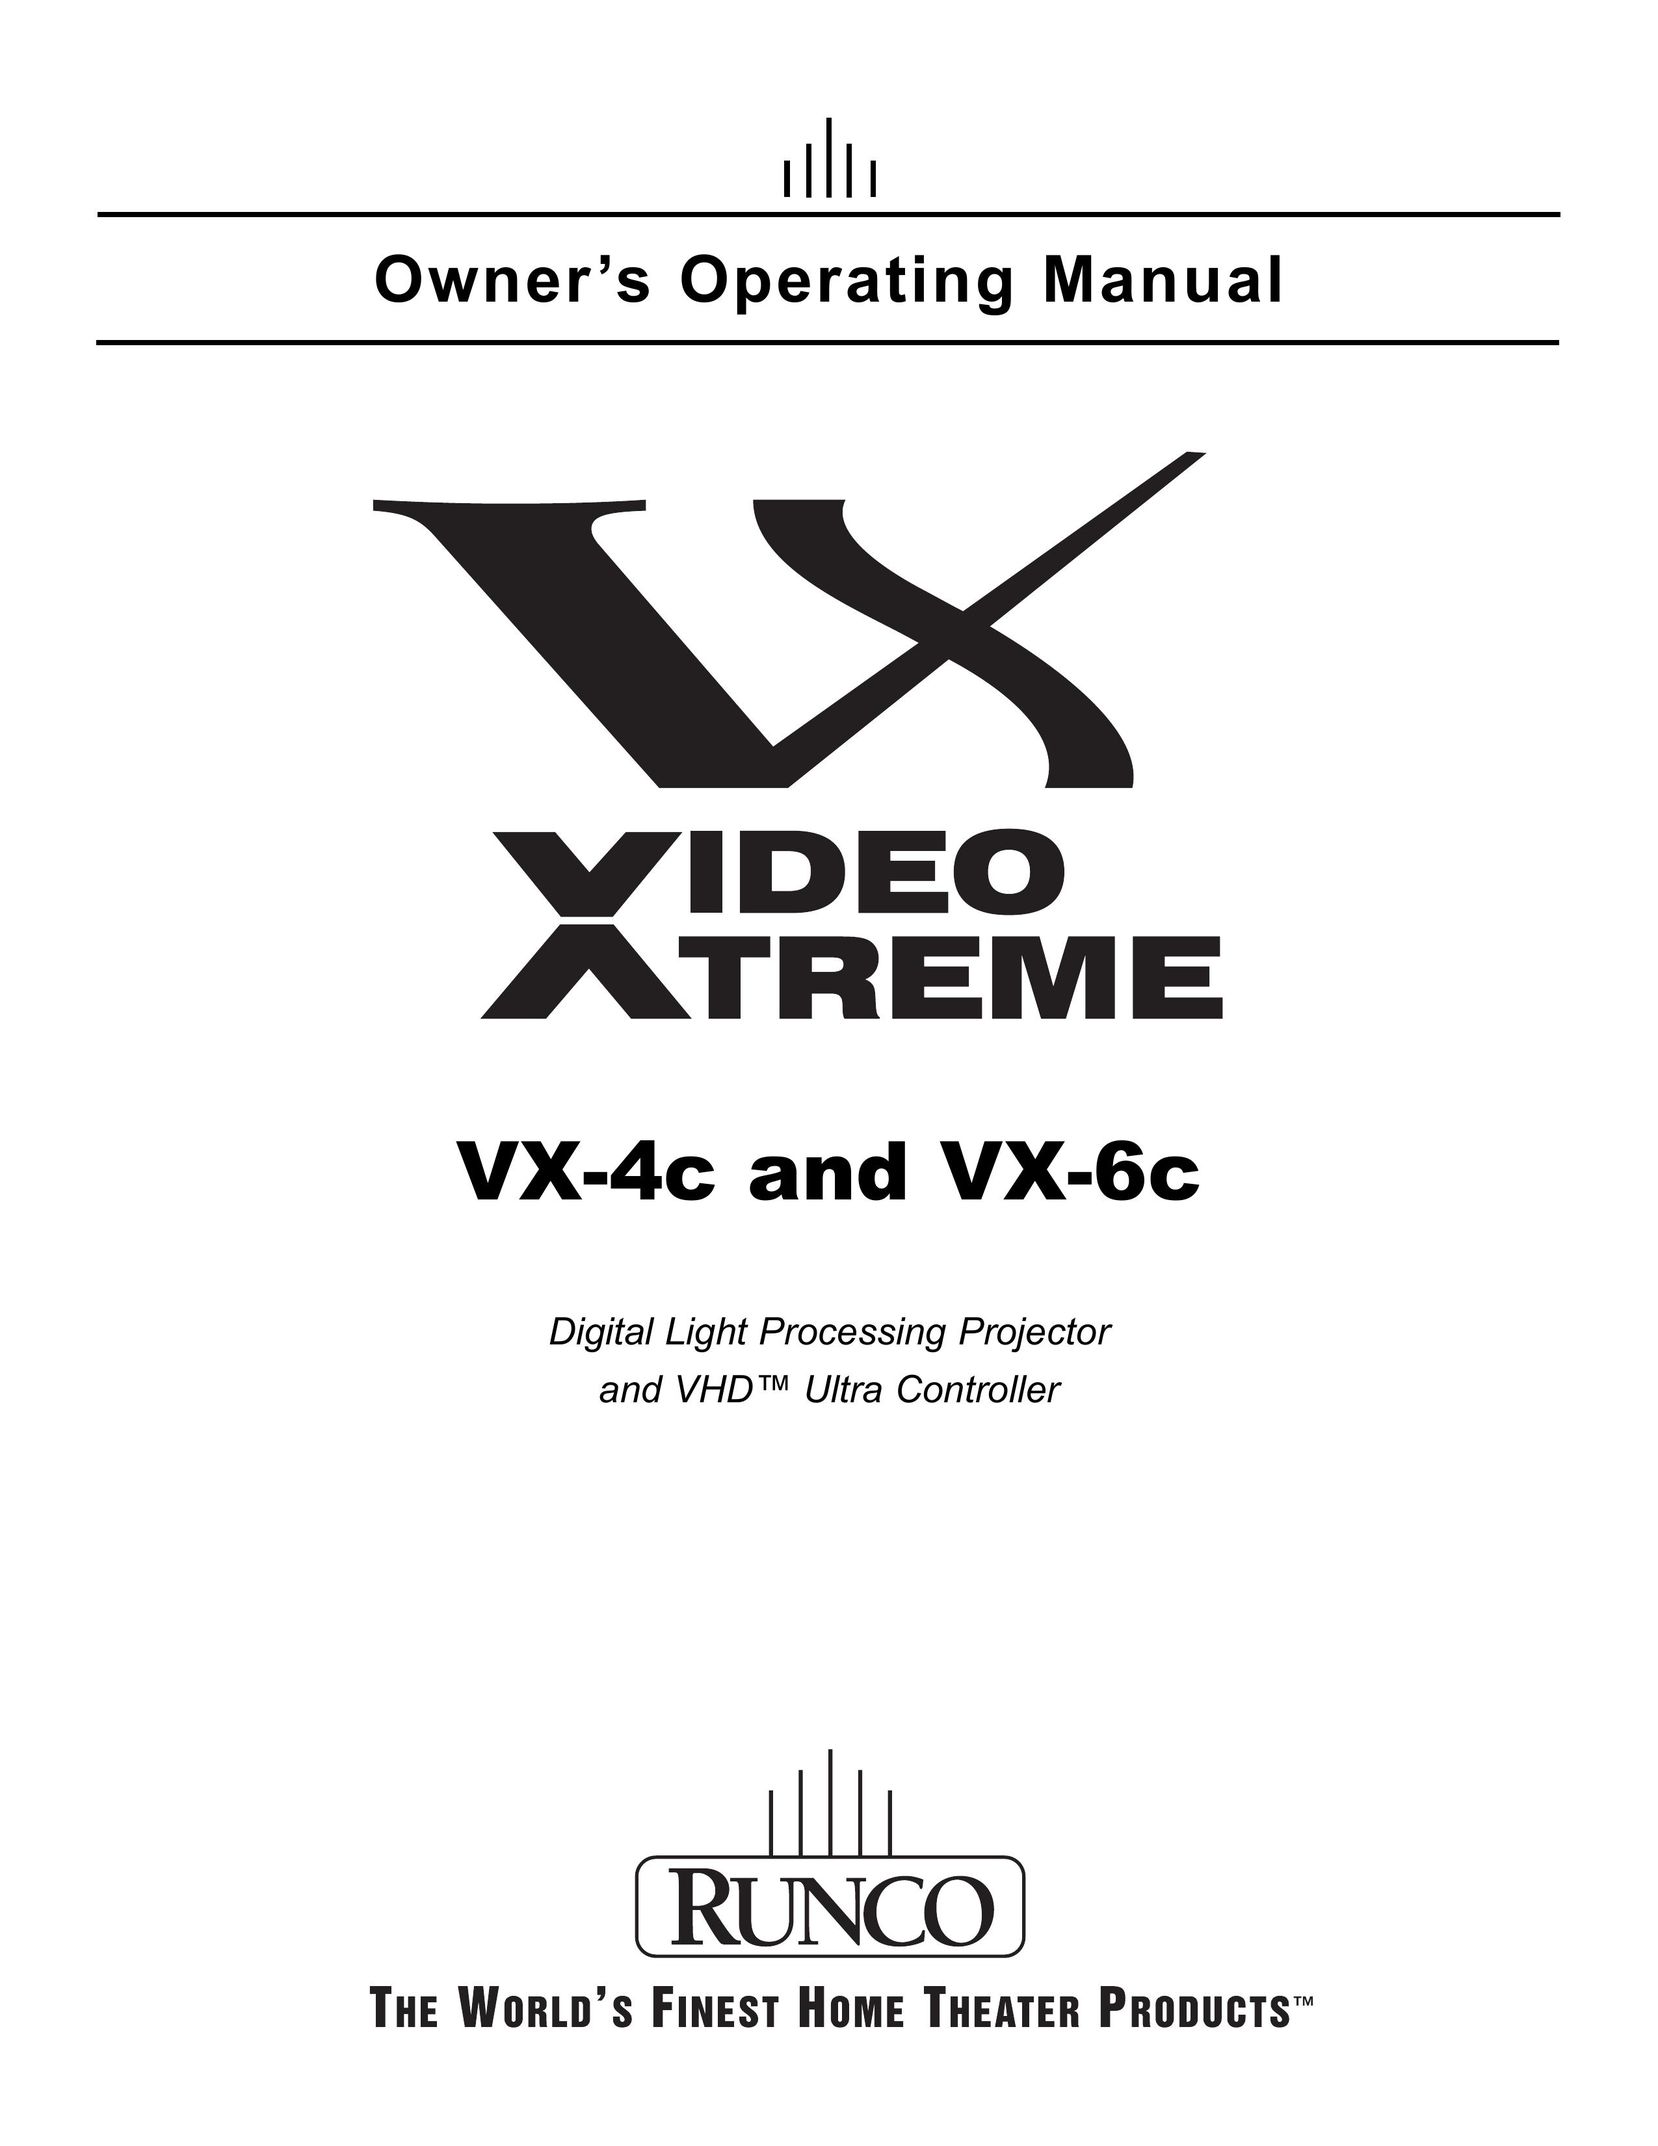 Runco VX-6C Home Theater System User Manual